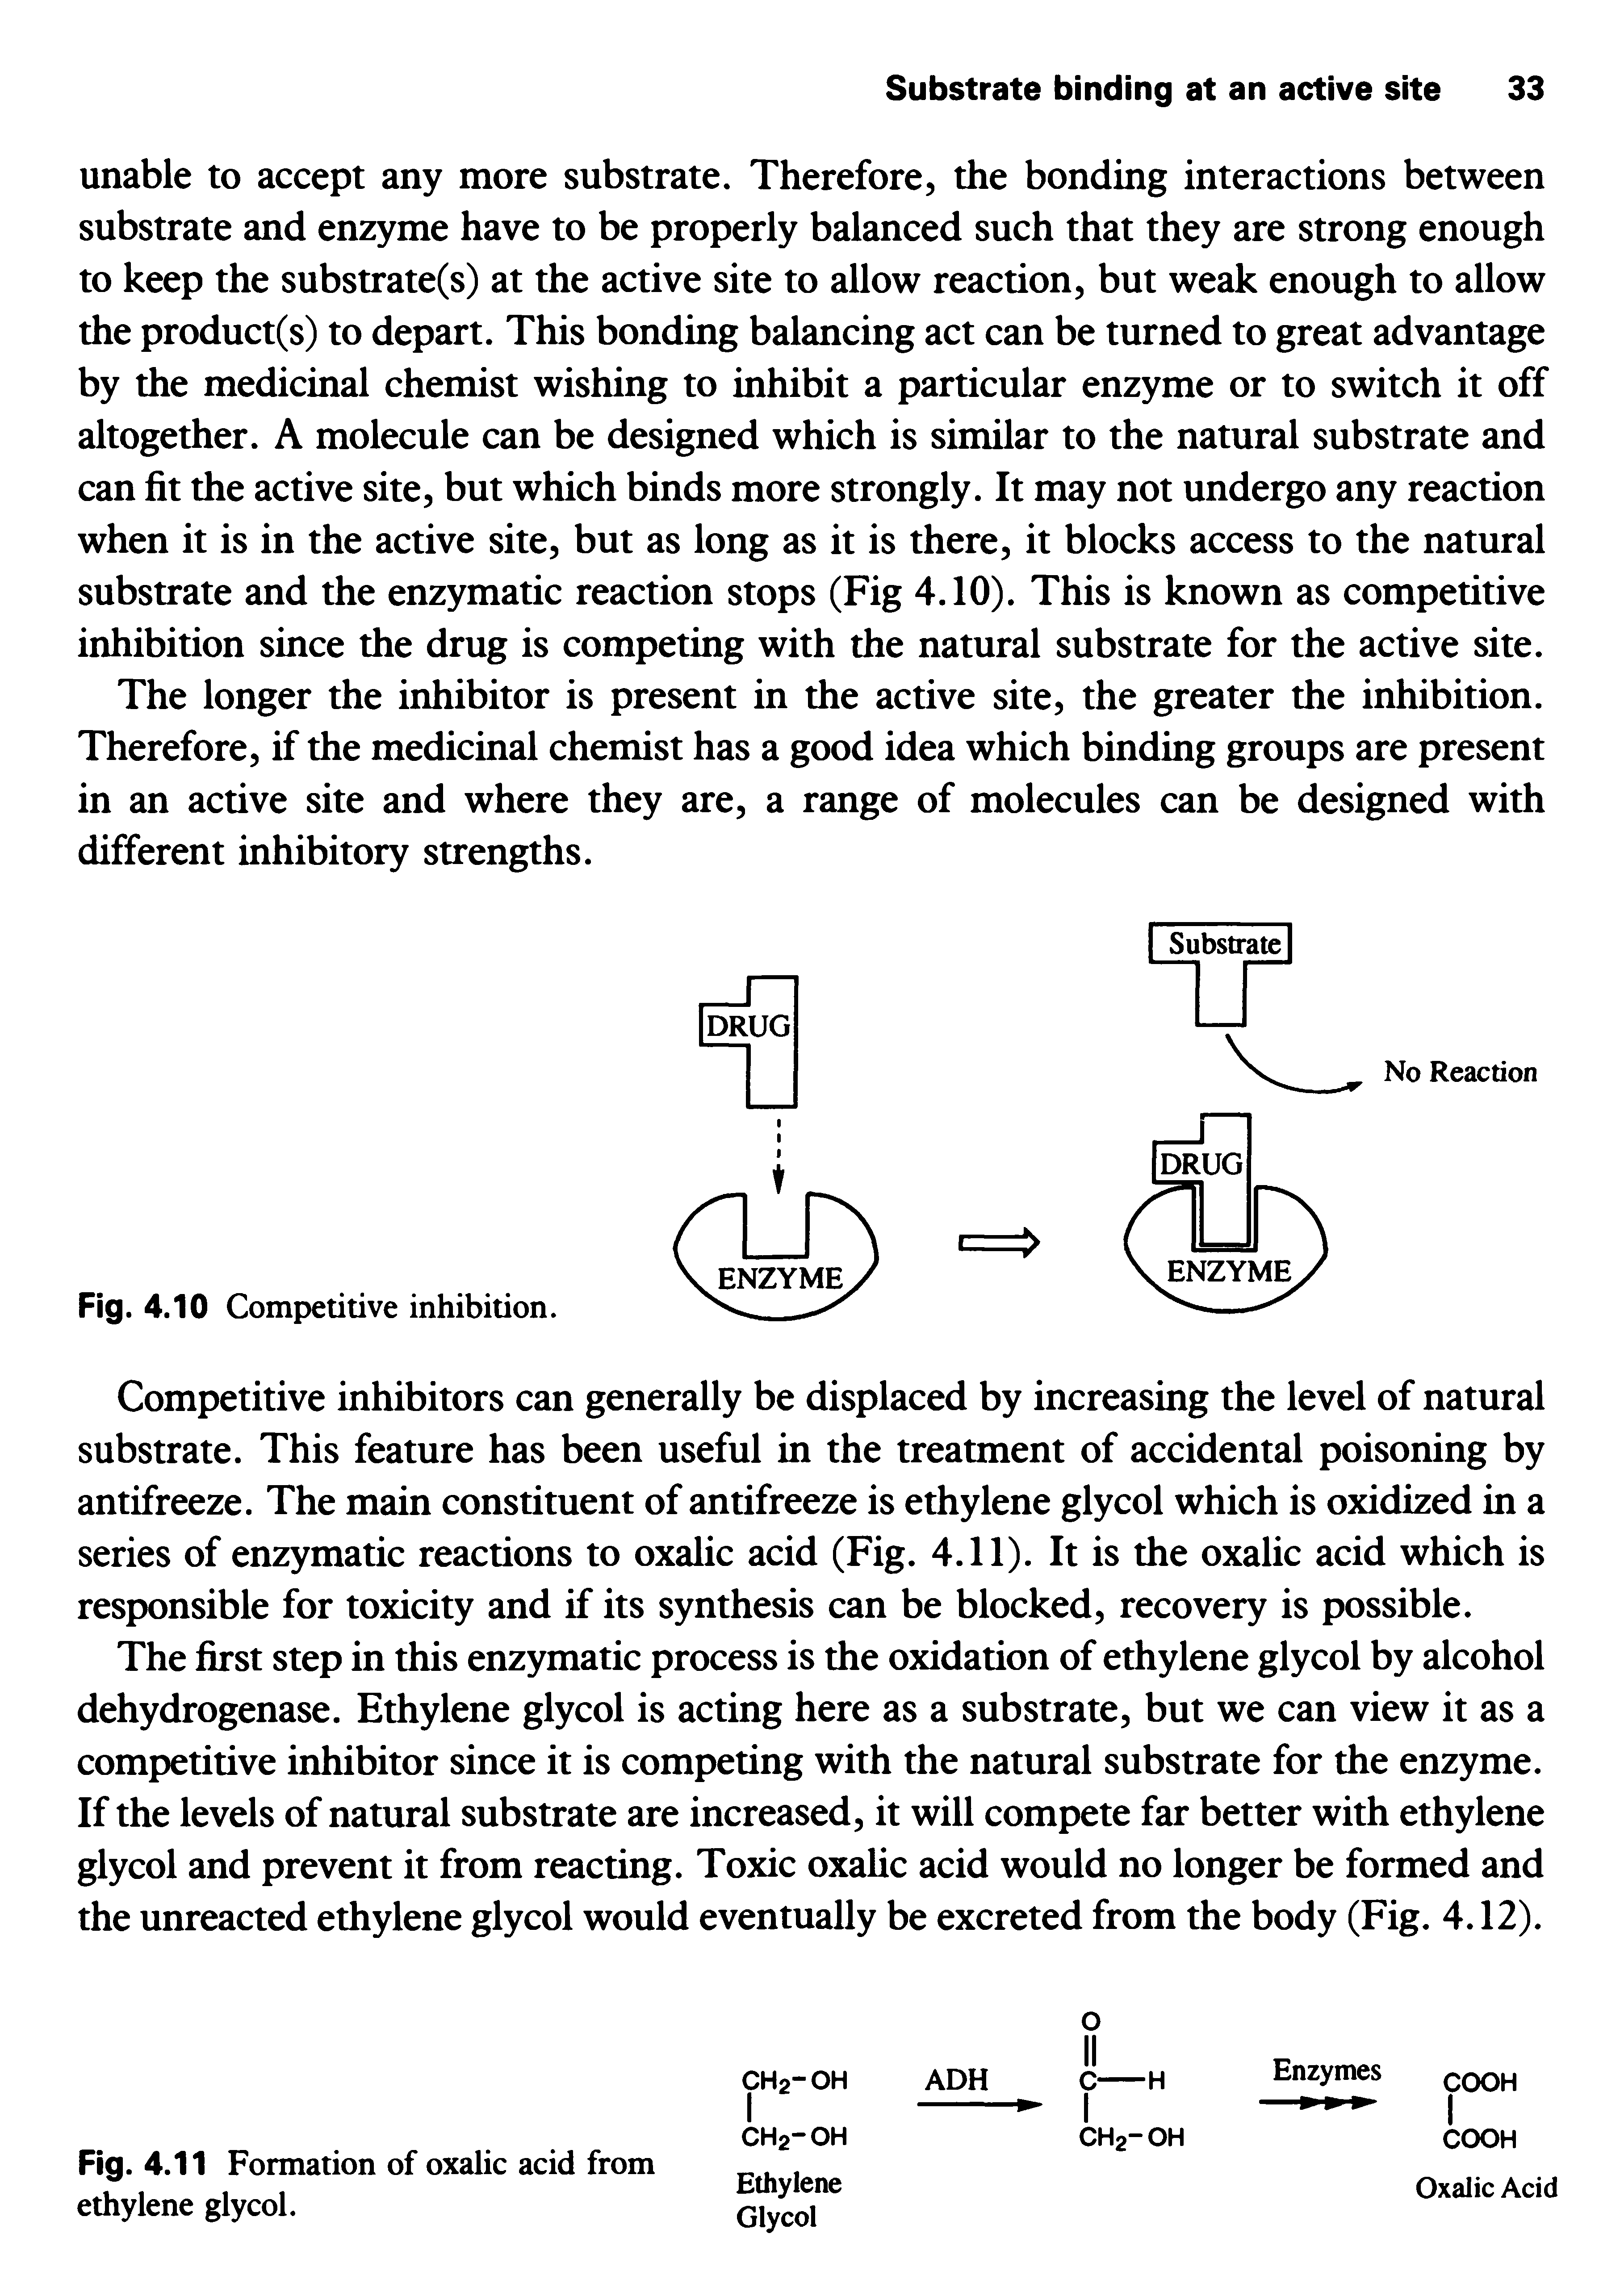 Fig. 4.11 Formation of oxalic acid from ethylene glycol.